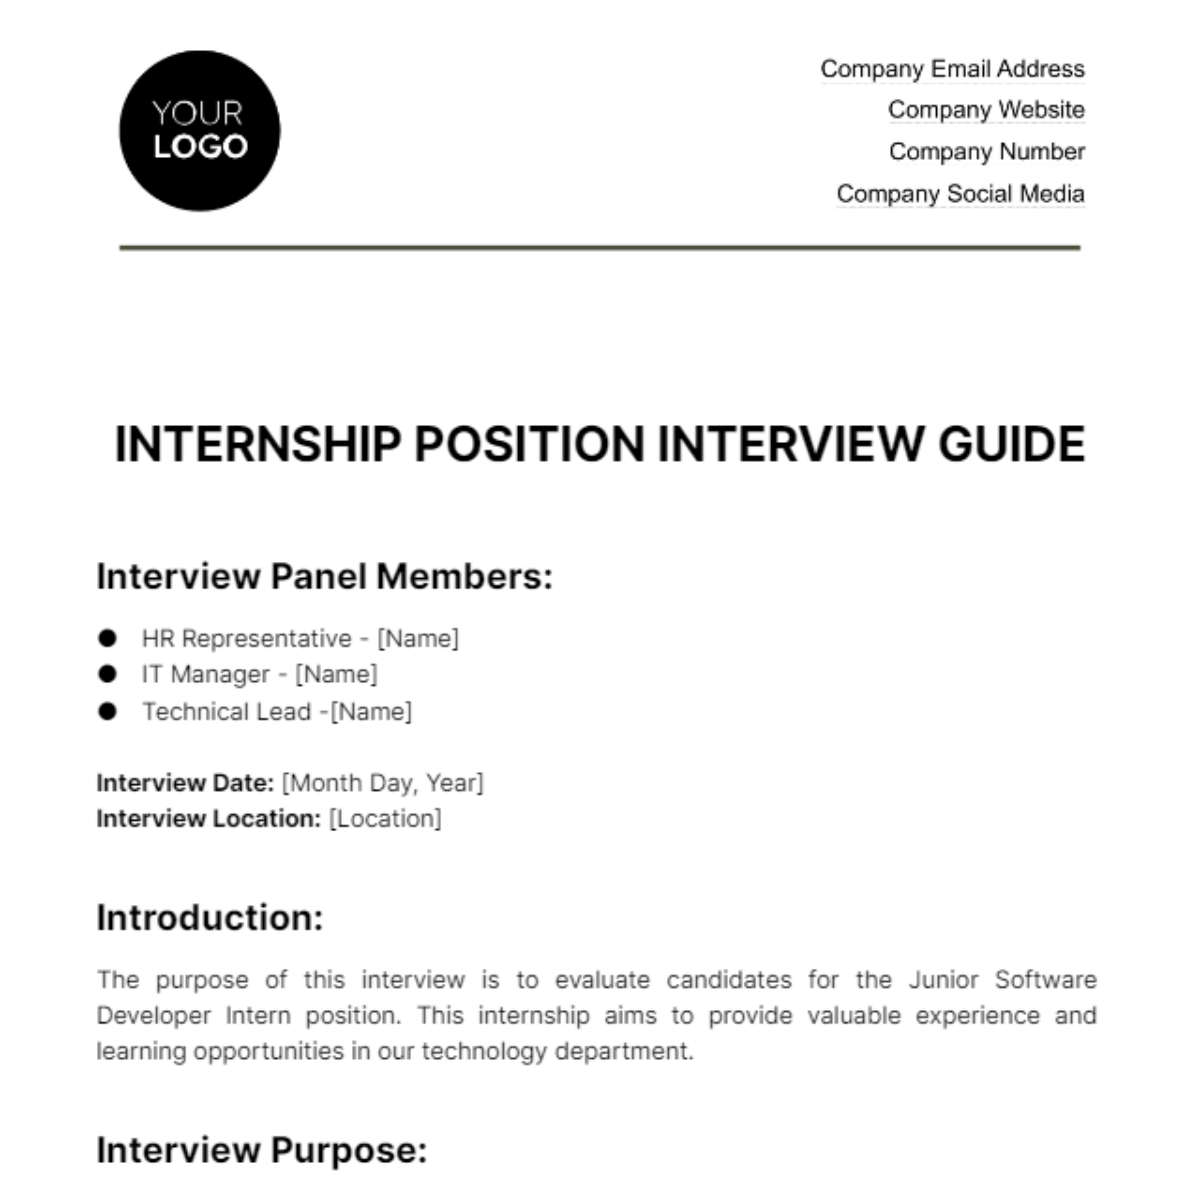 Internship Position Interview Guide HR Template